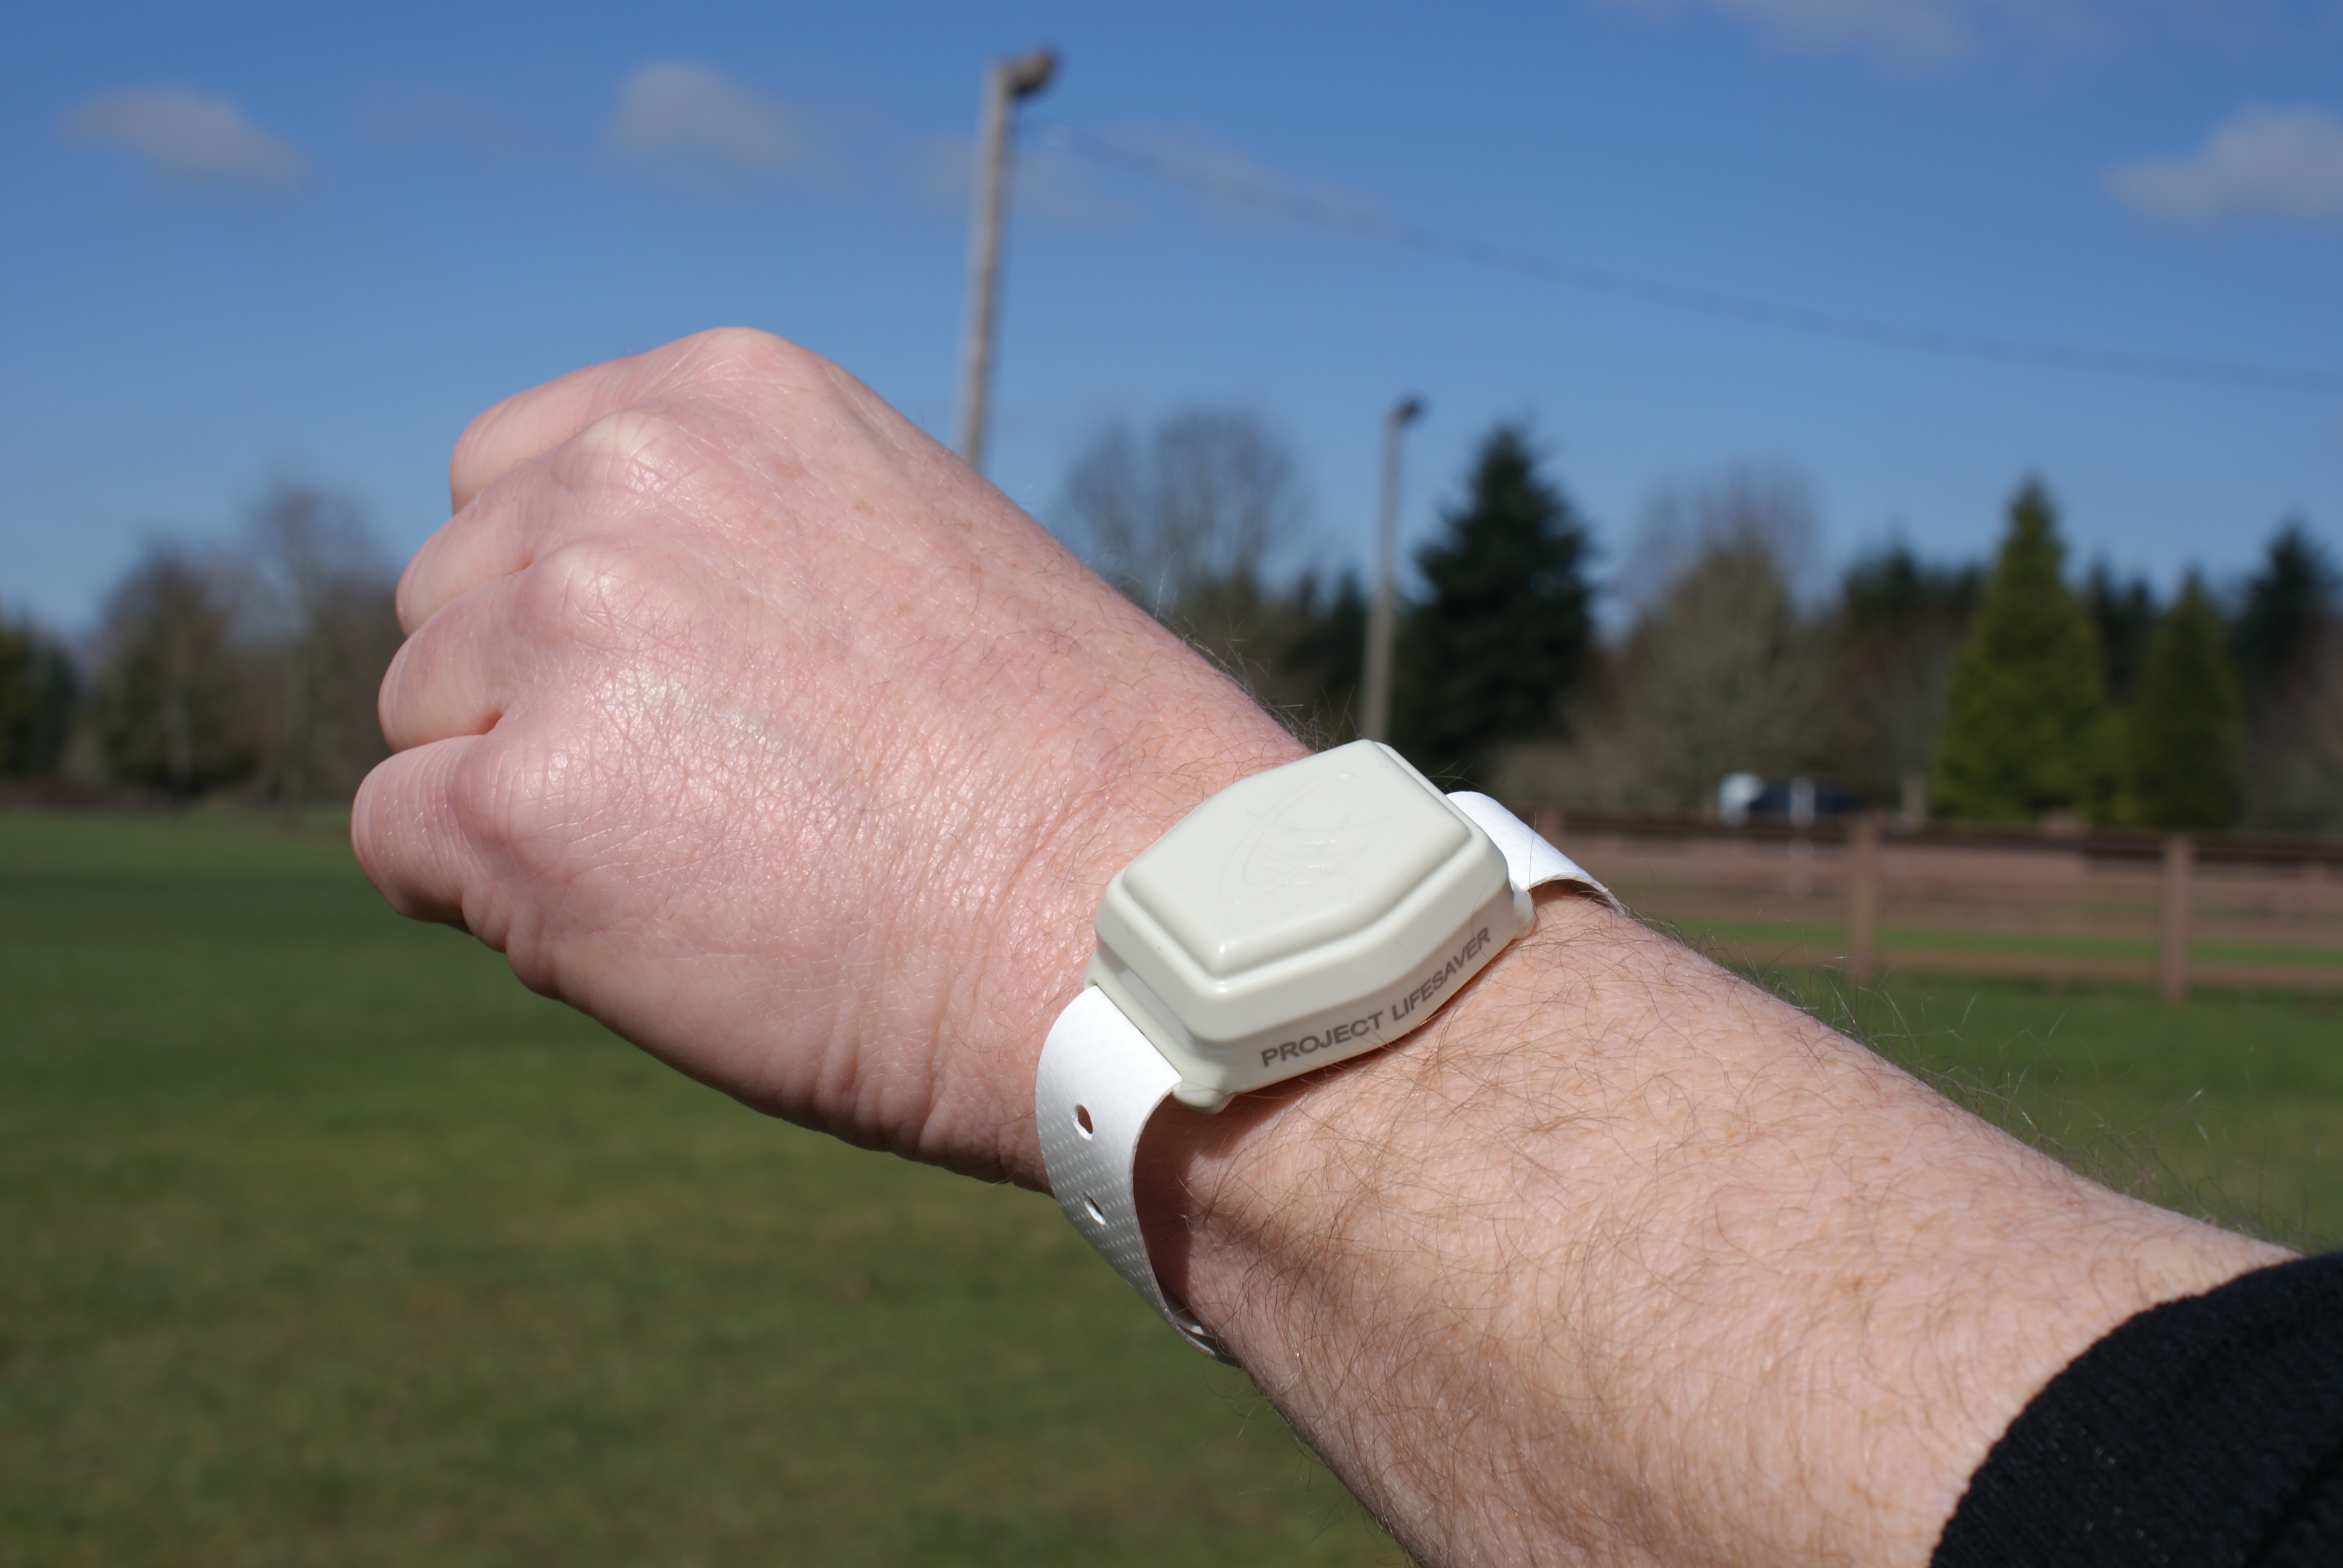 The Project Lifesaver wristband. 